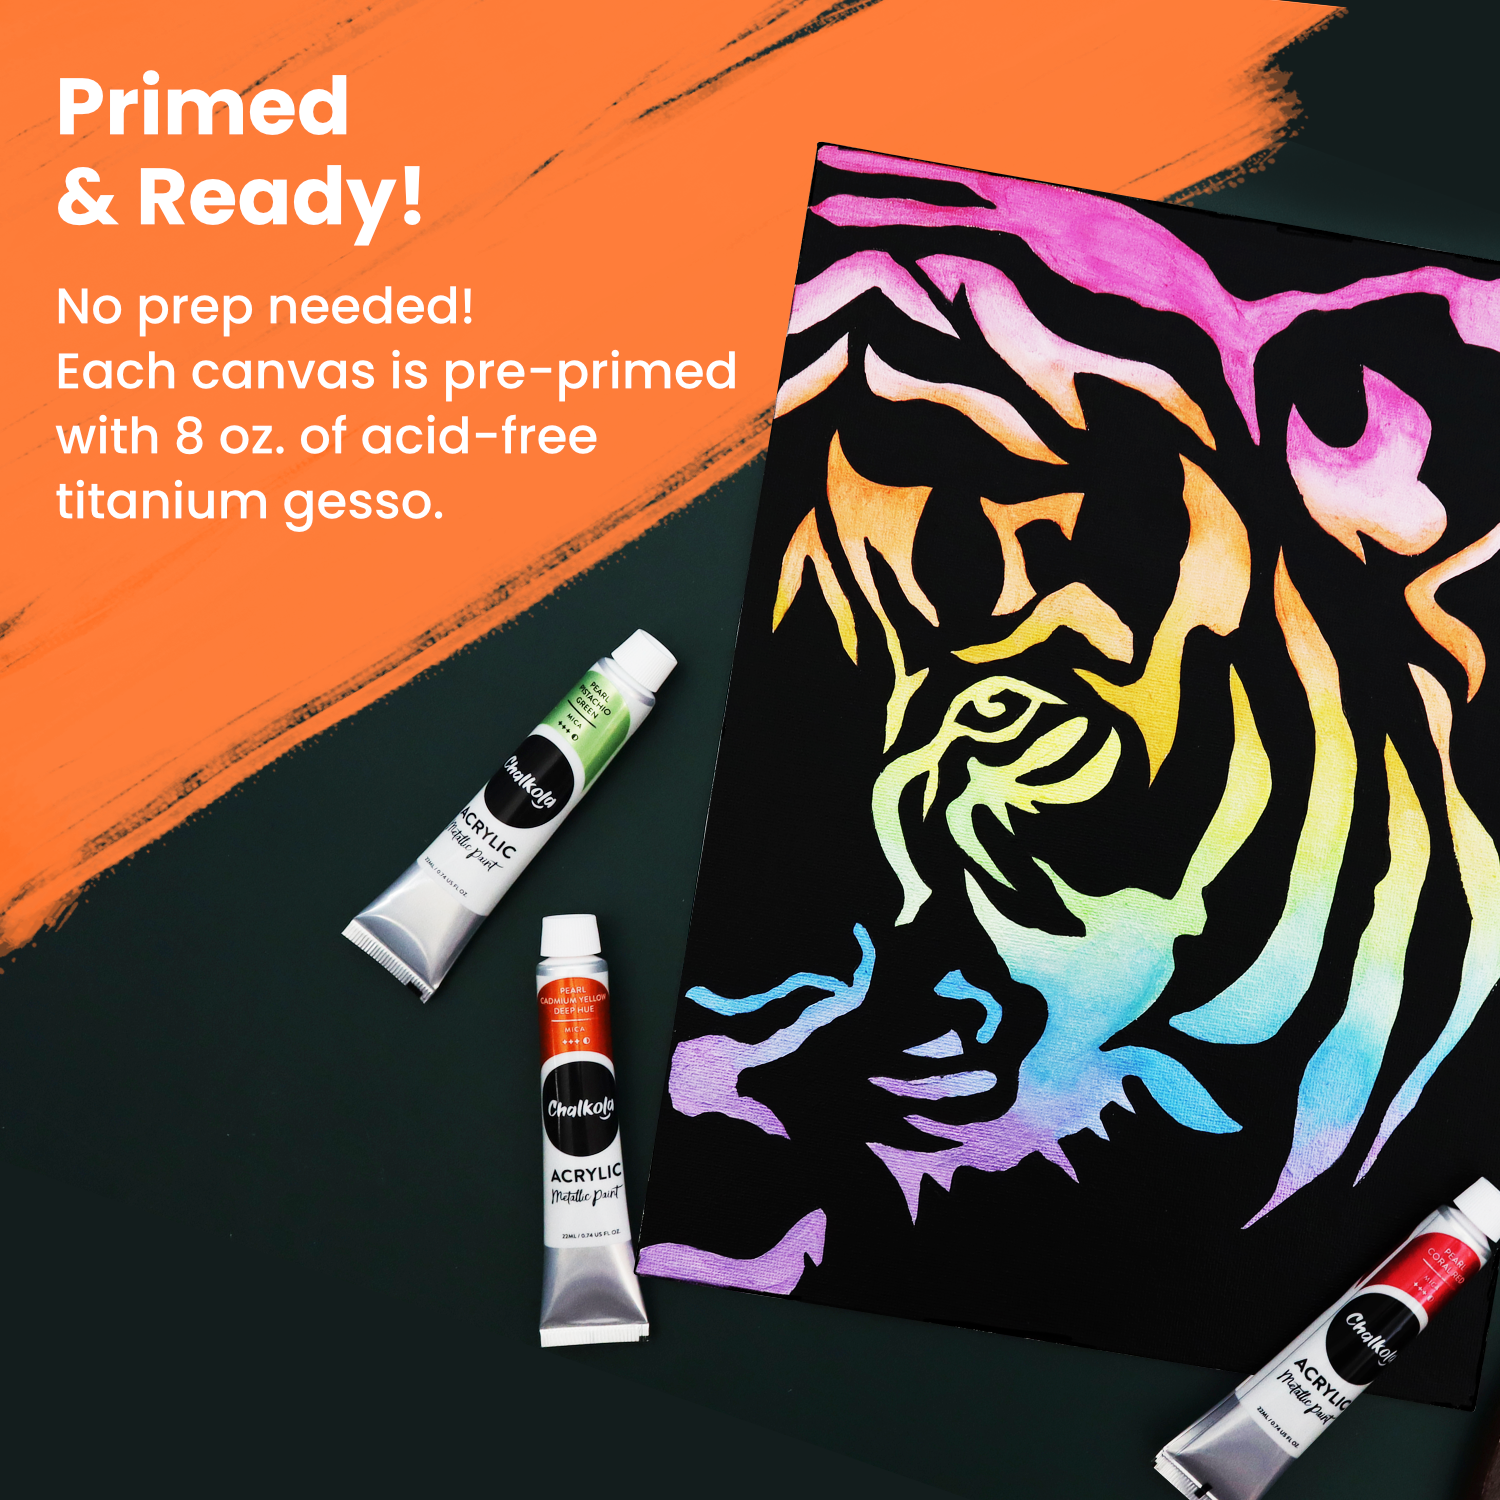 Black Paint Canvas Panels 8x10 inch (15 Pack) - Chalkola Art Supply